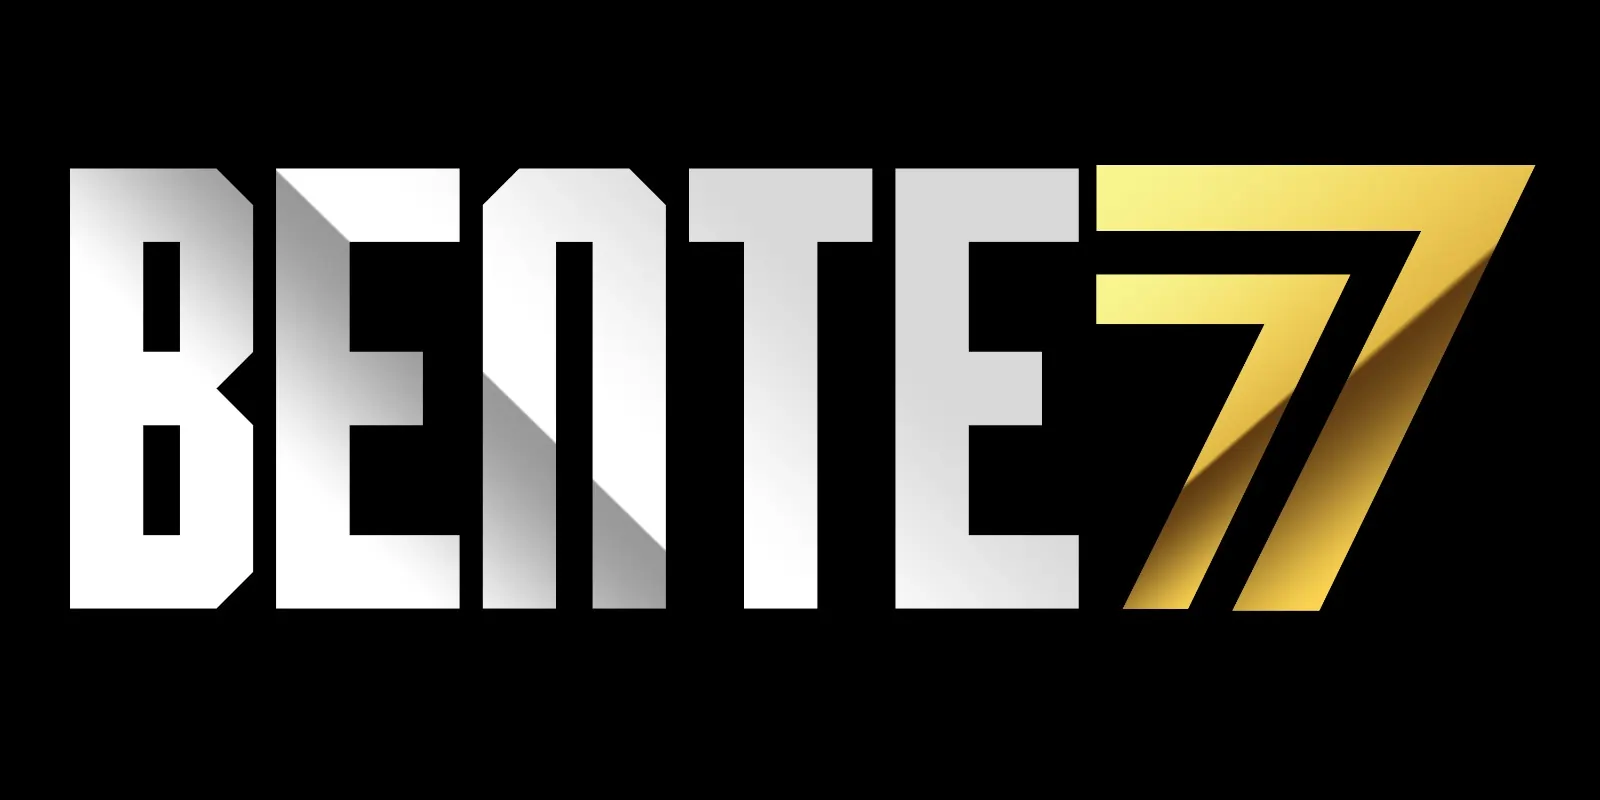 bente77 register